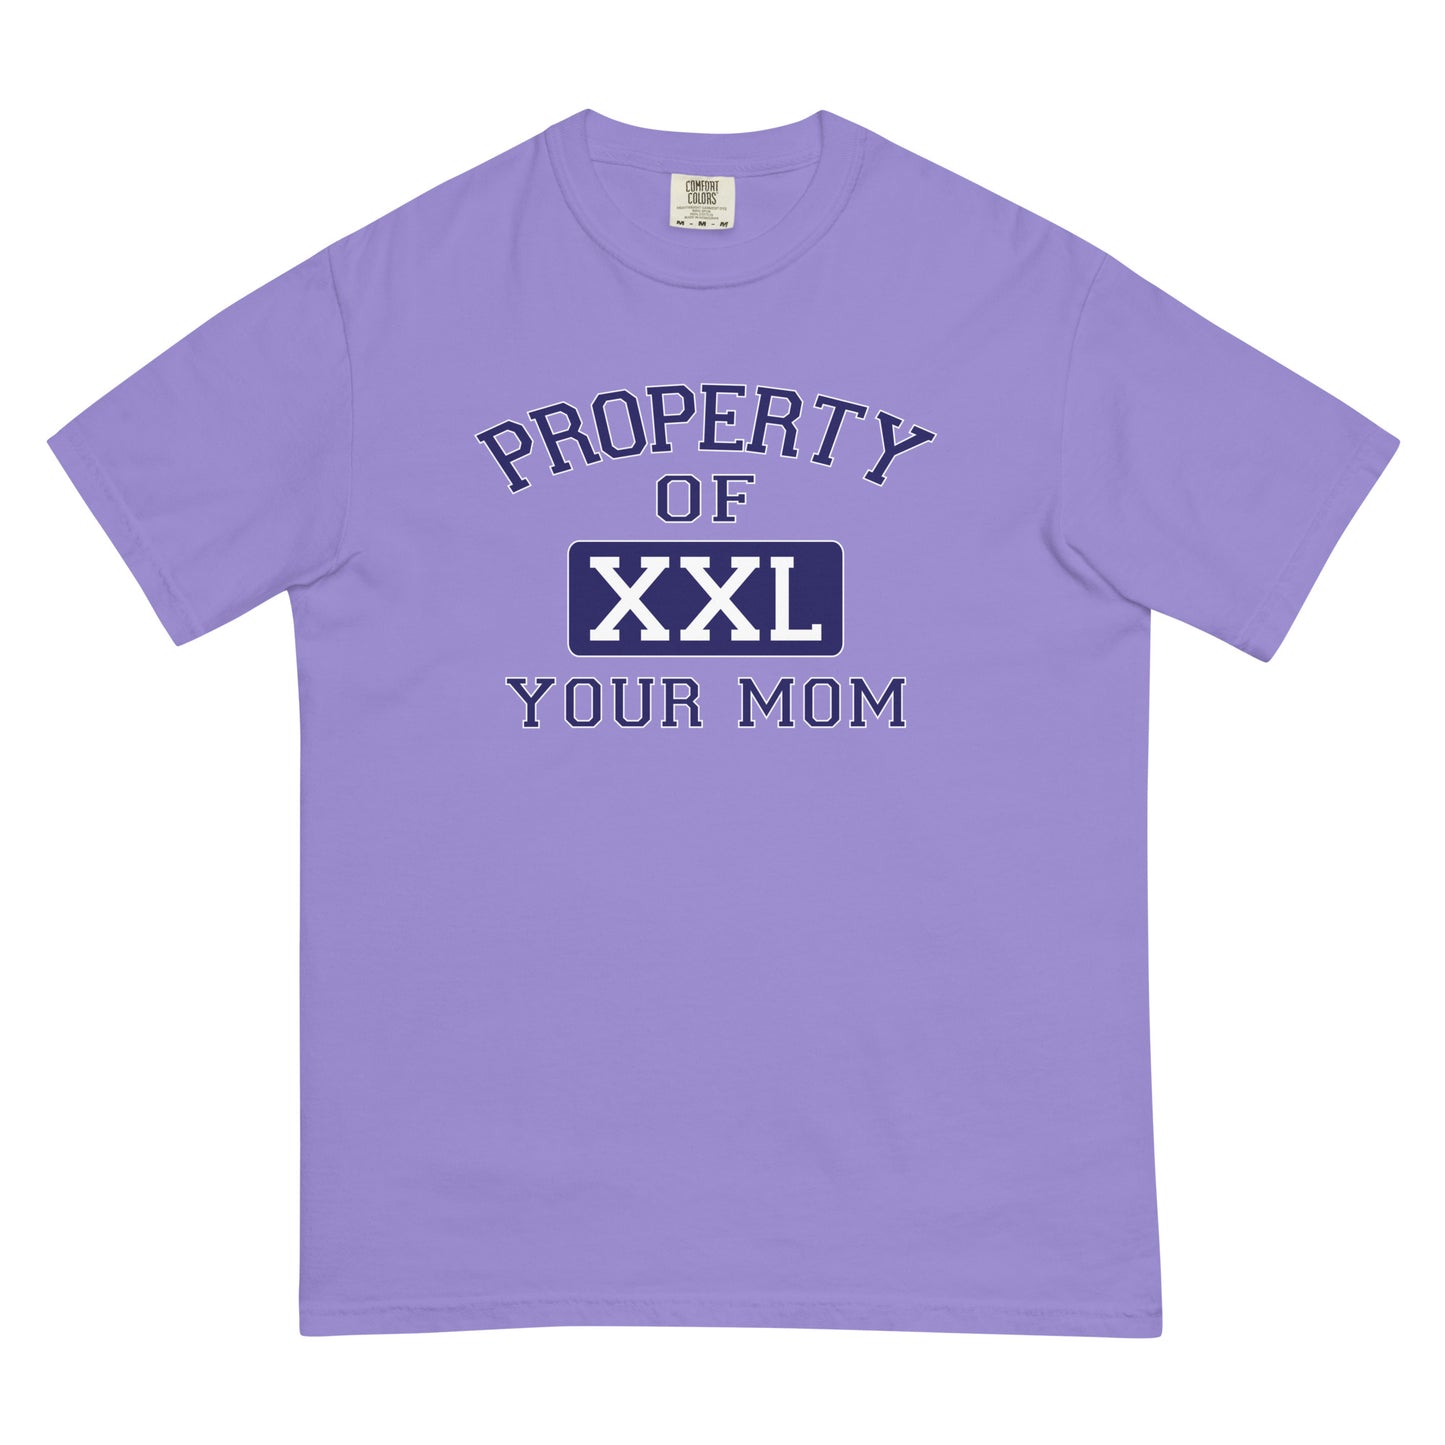 XXL Your Mom's Tee